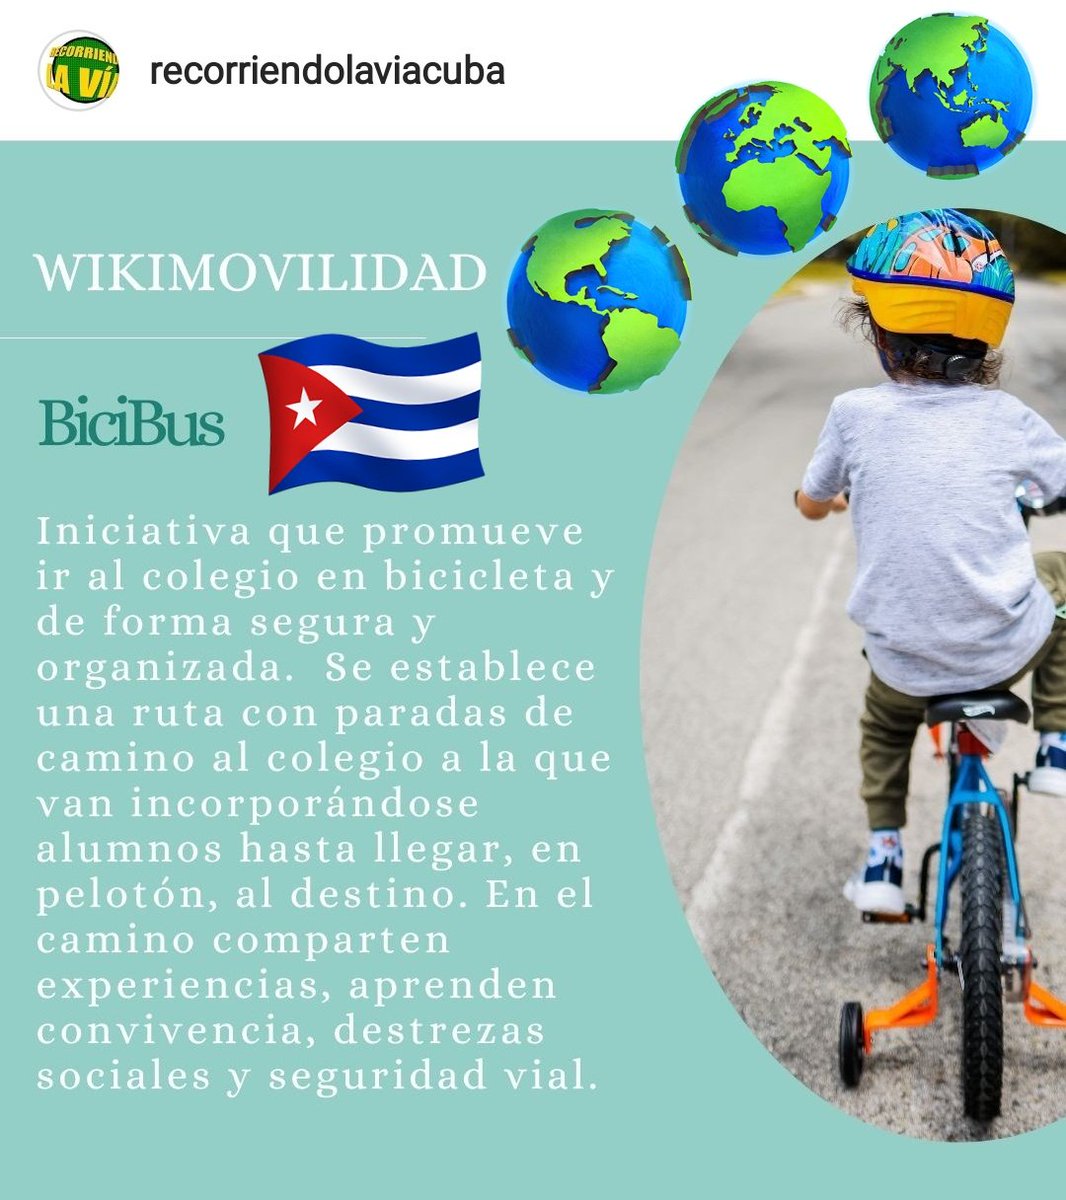 #bicibus #bikebus #velobus #fahrradbus #fietspoolen #बाइकबस
MovimentGlobal‼️🌍🌎🌏
#MovimientoGlobal #MouvementMondial #GlobalMovement #WereldwijdeBeweging #वैश्विकआंदोलन #GlobaleBewegung